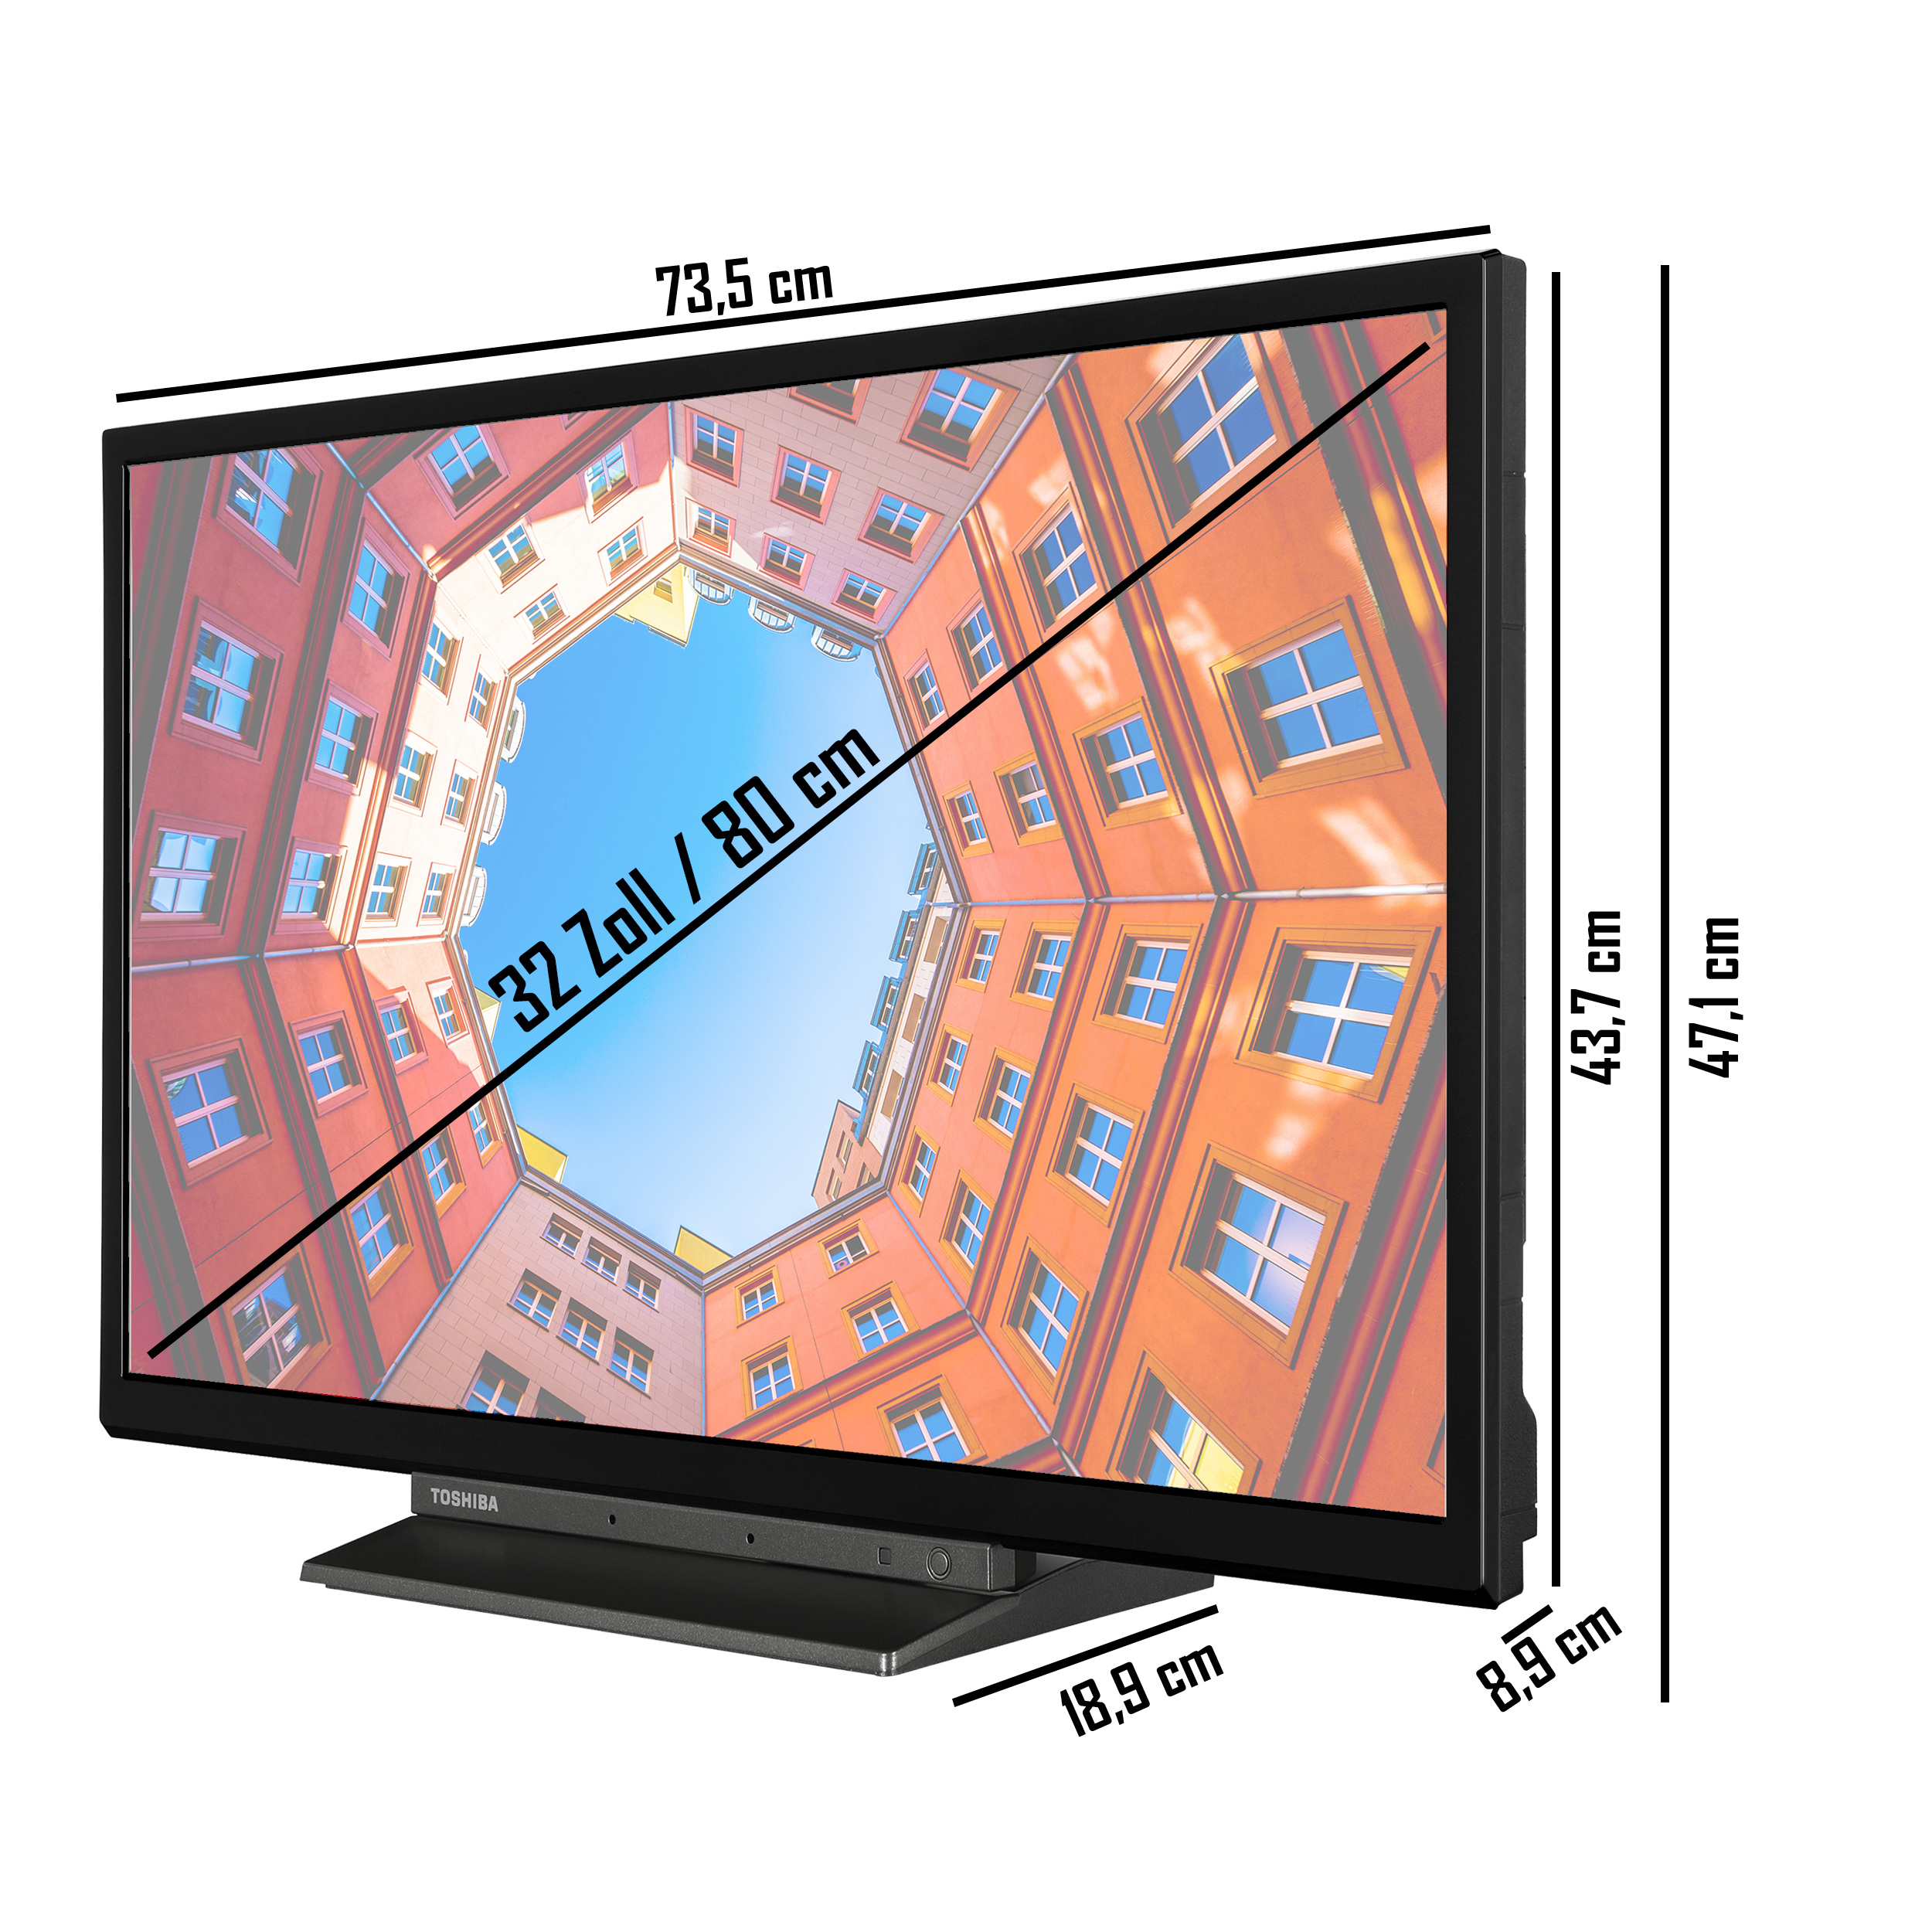 TOSHIBA Full-HD, SMART TV LED 32LK3C63DA (Flat, TV)